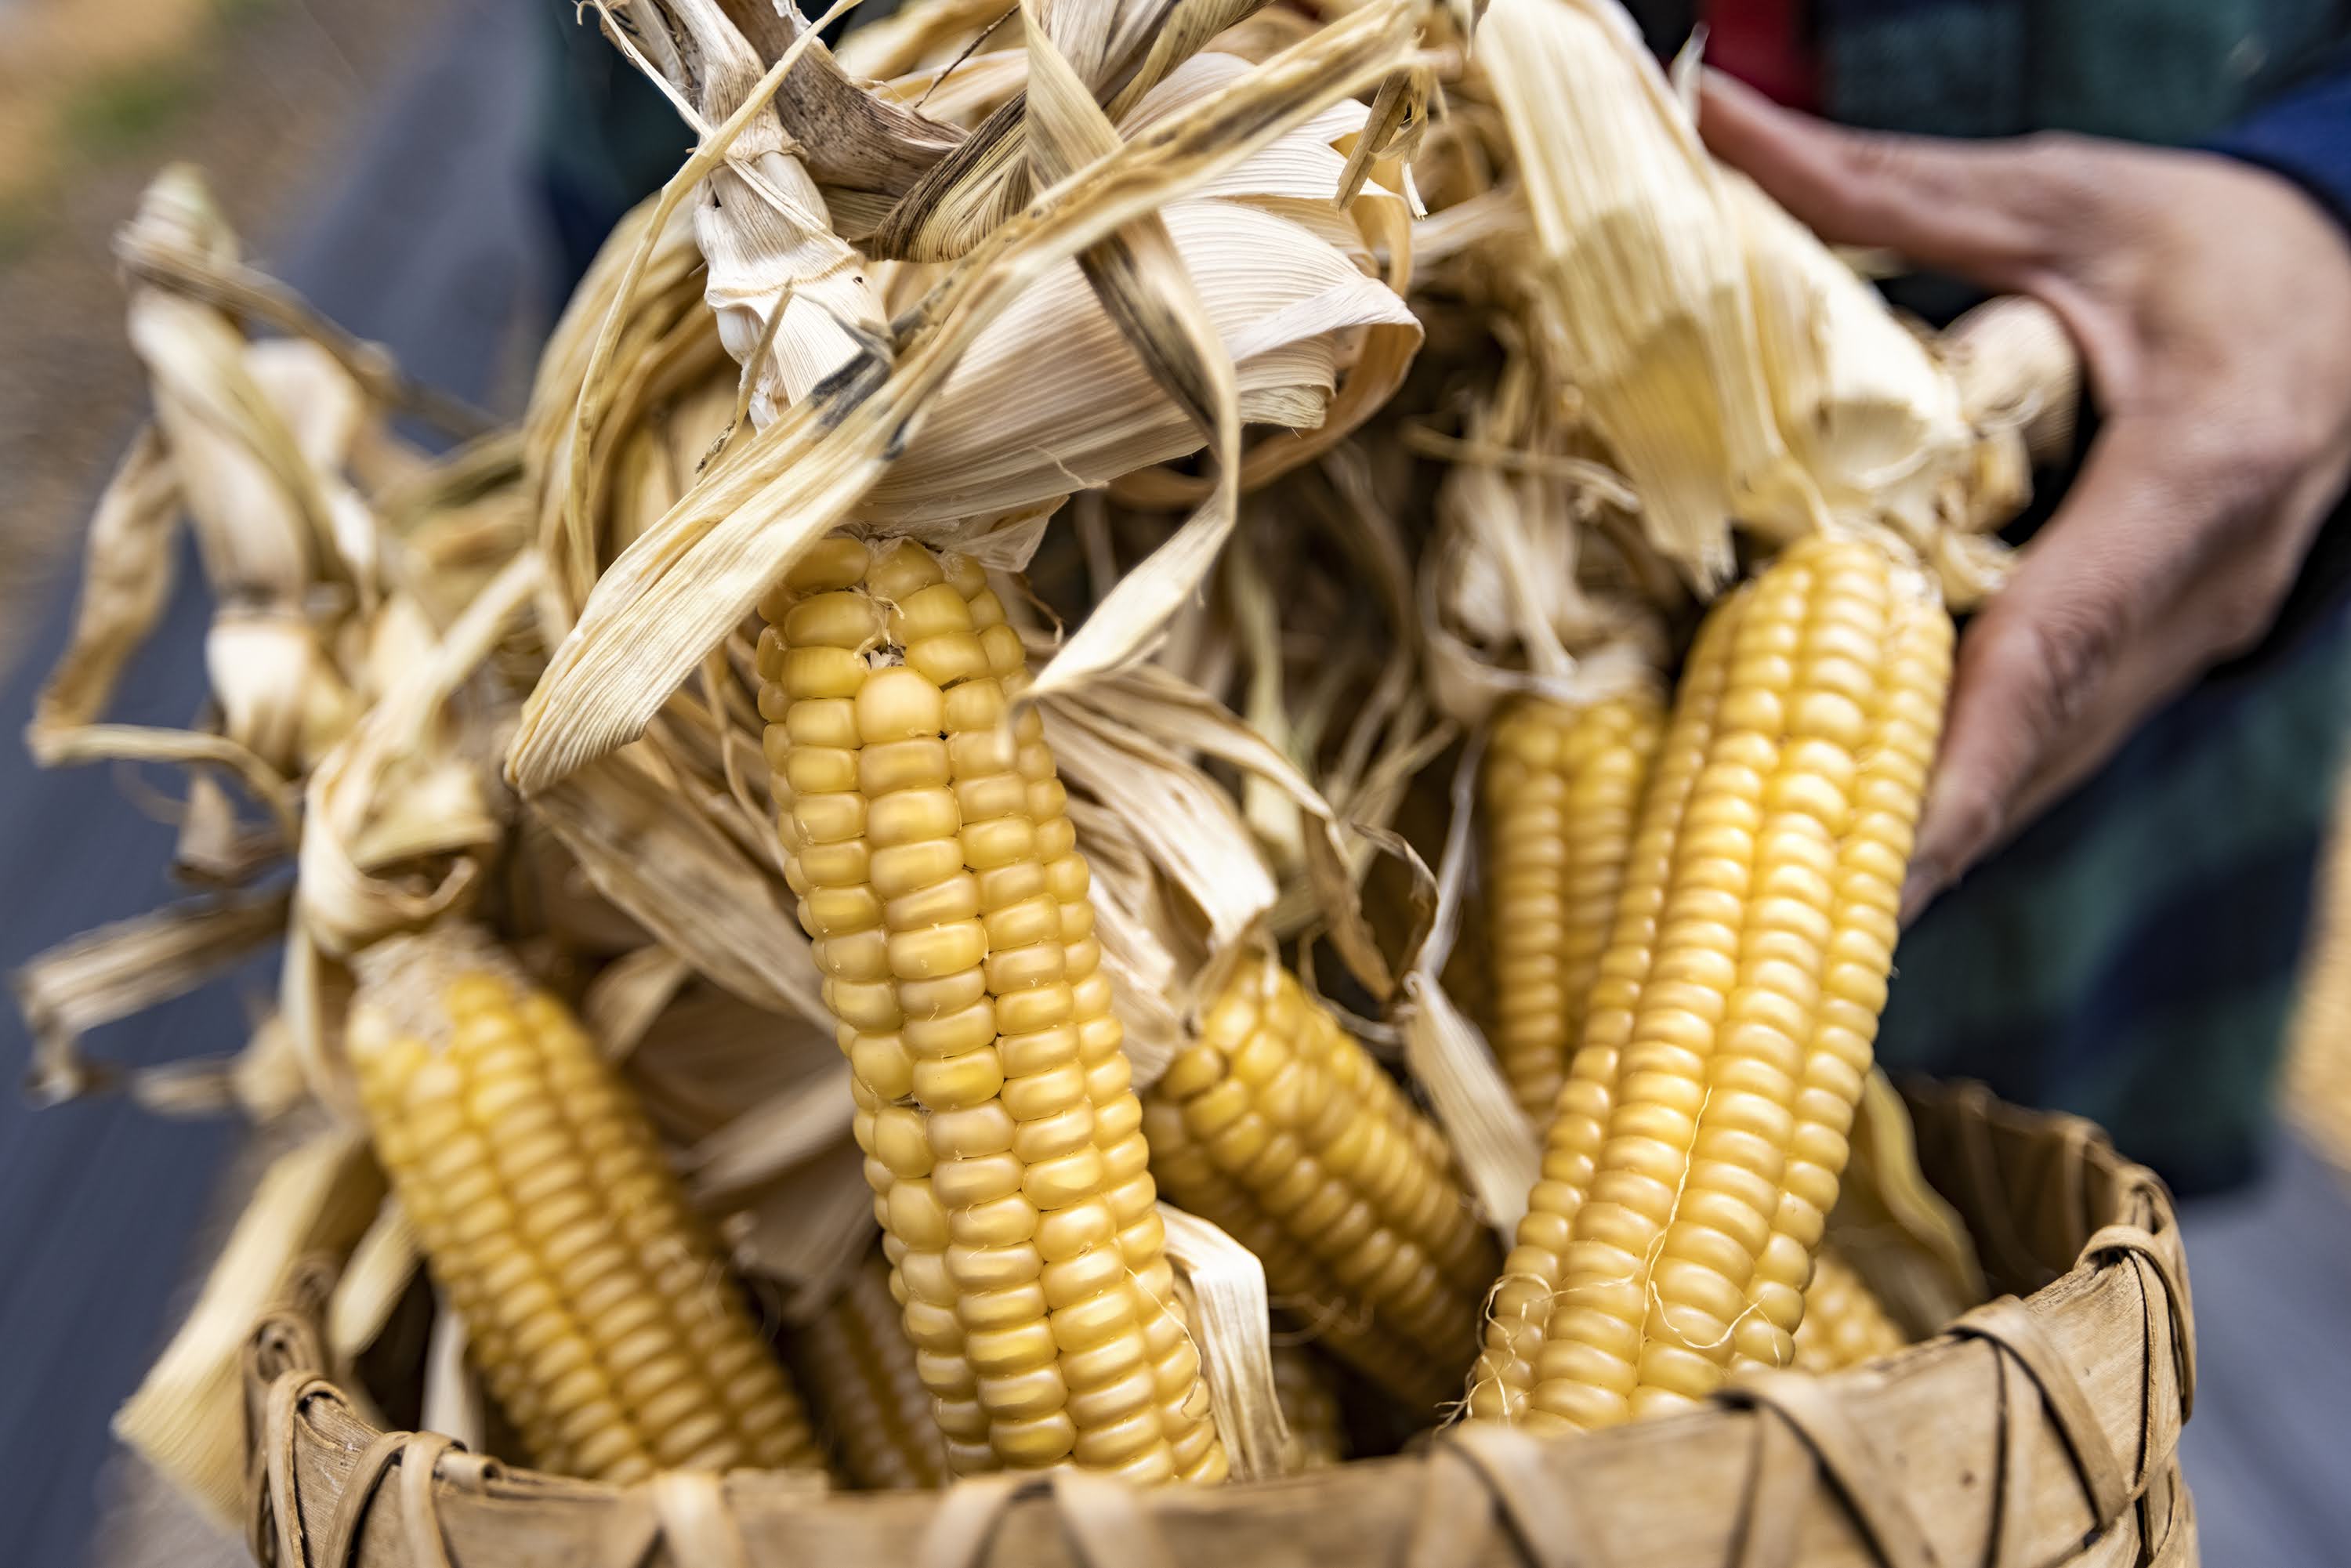 Narragansett flint corn grown by the owners of Ashawaug Farm in Rhode Island. (Jesse Costa/WBUR)